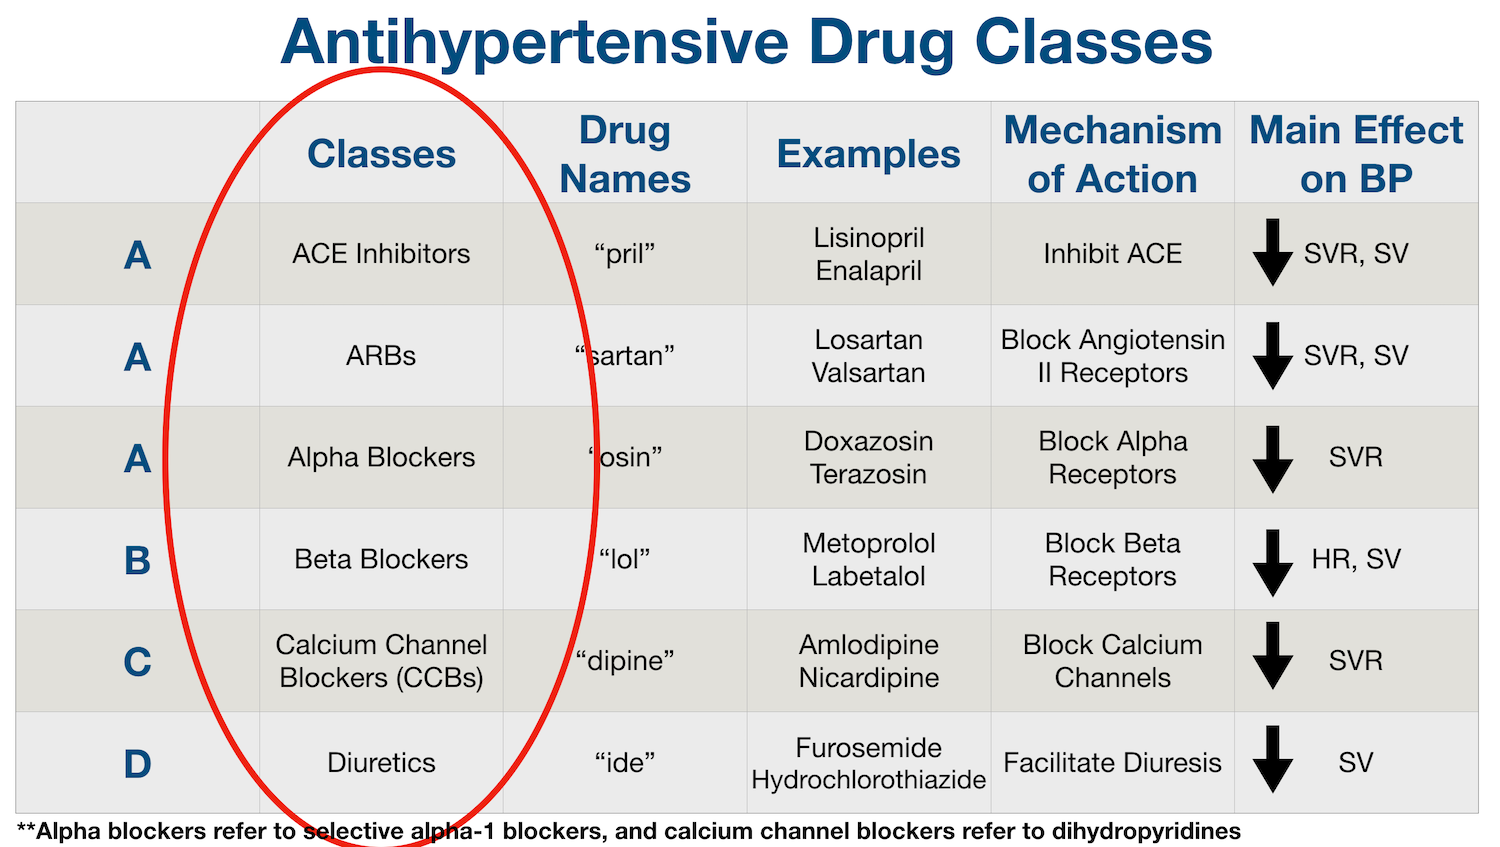 hypertension classification drugs